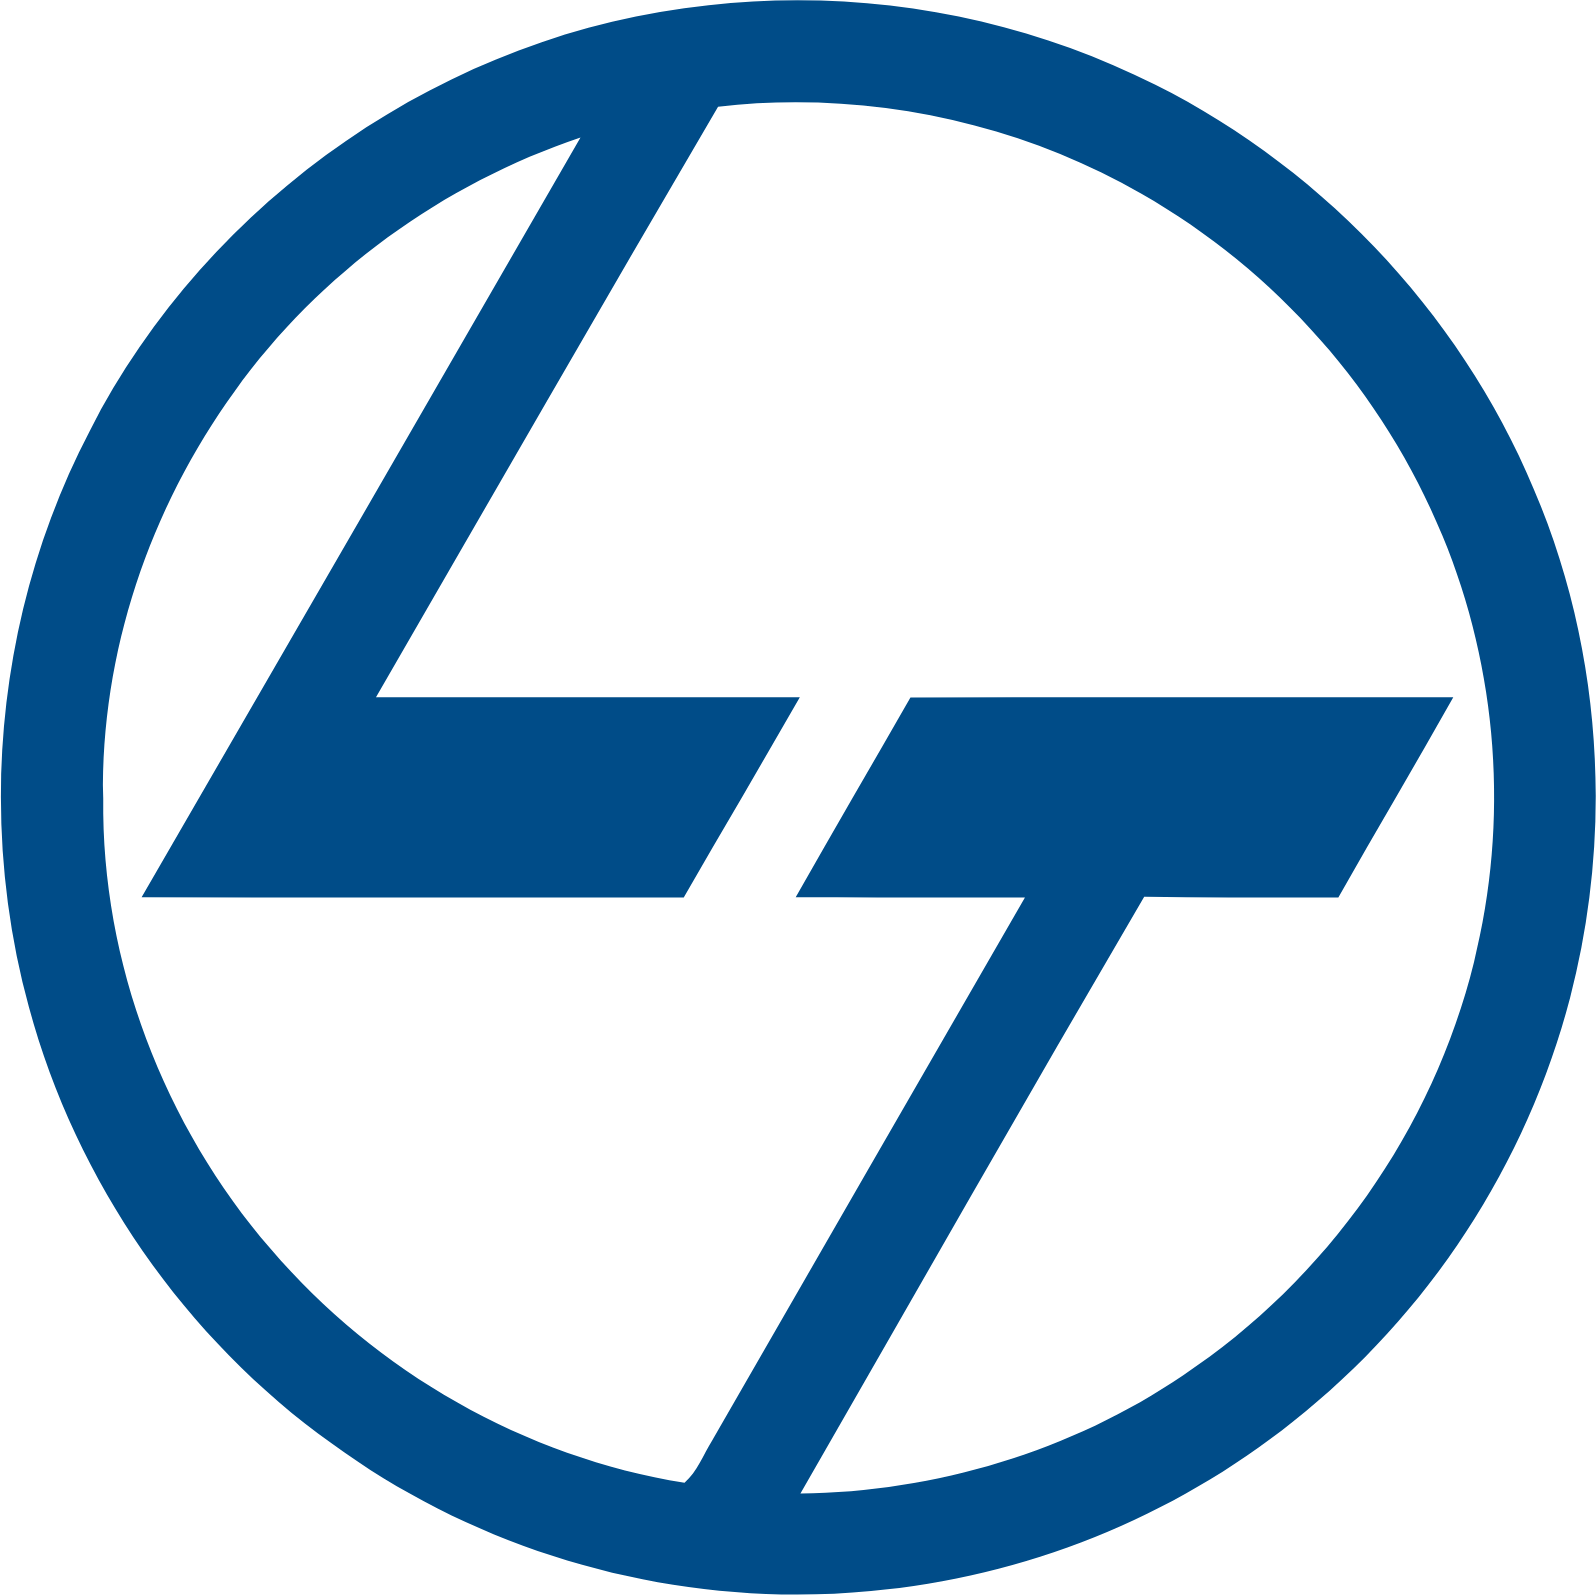 LTIMindtree logo (transparent PNG)